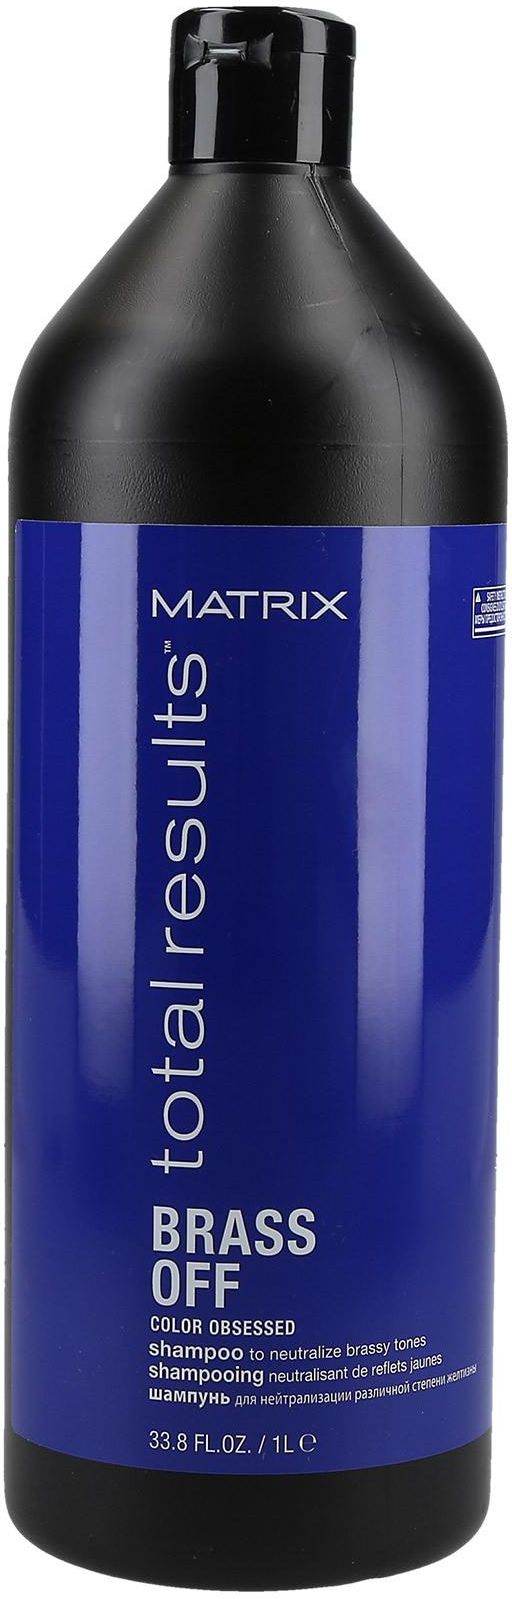 matrix brass off szampon 1000ml cena